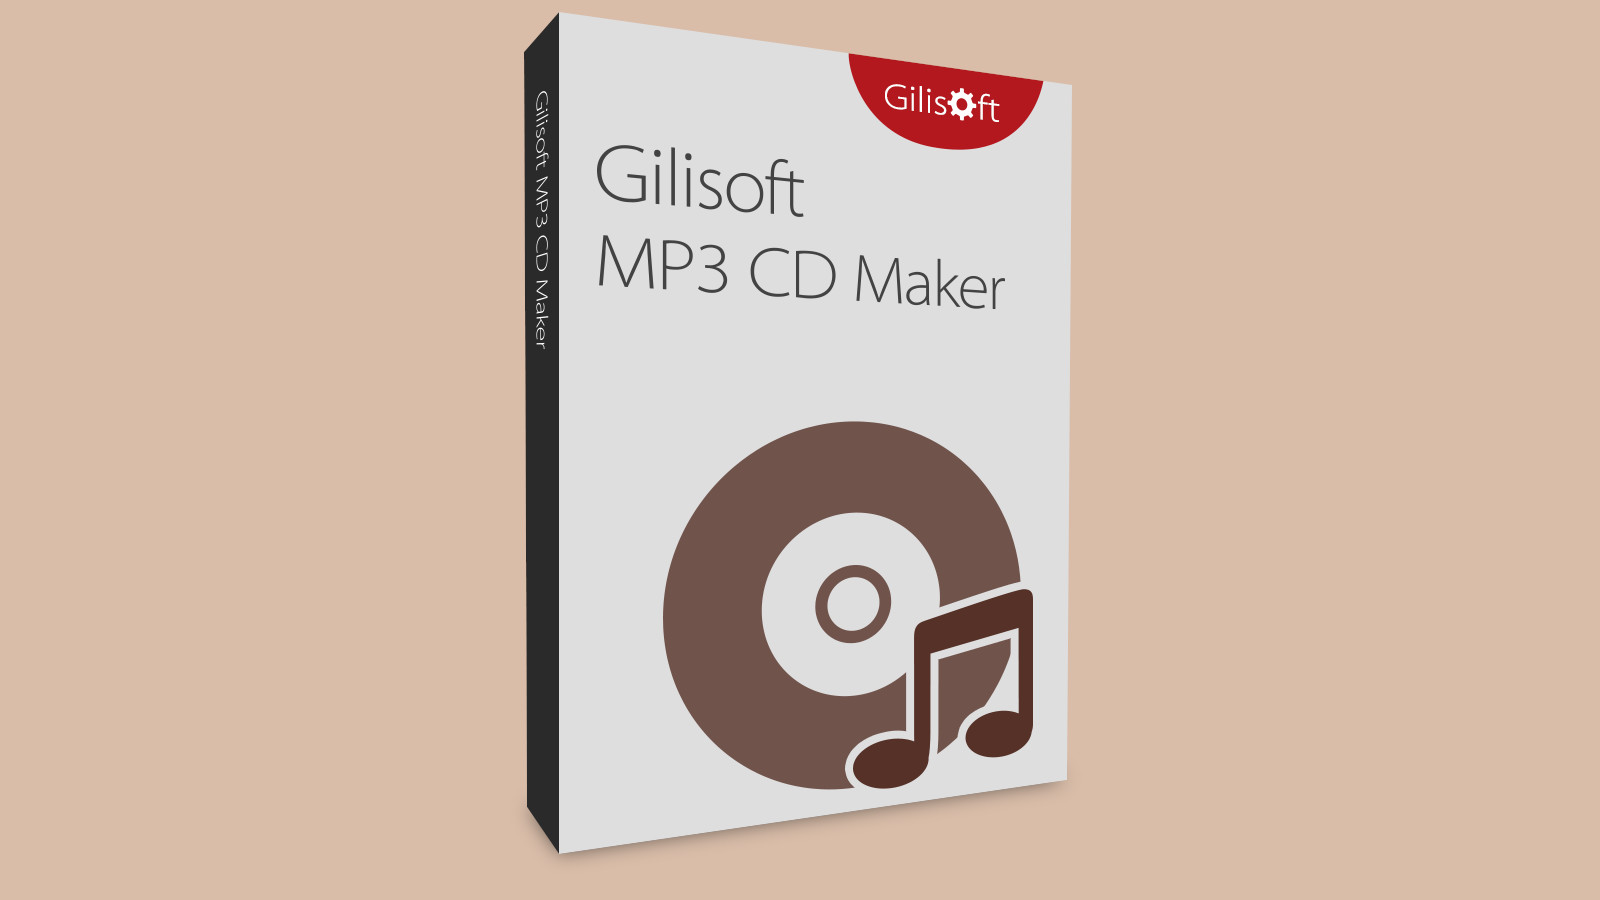 Gilisoft MP3 CD Maker CD Key [USD 5.65]